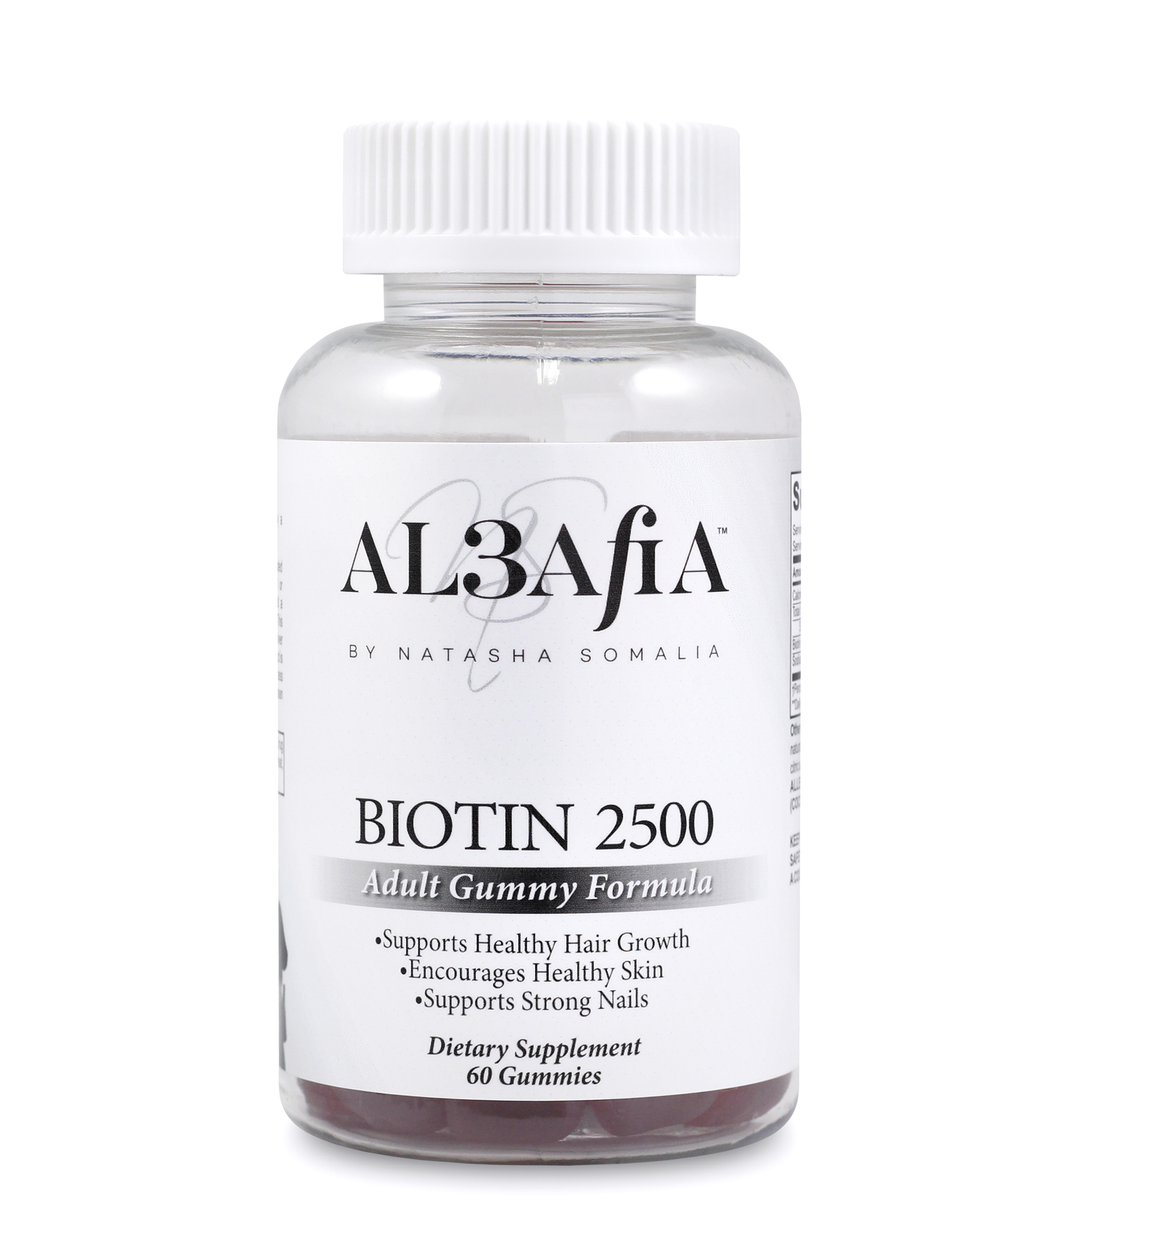 Biotin-2500 30 day supply (No Gelatin, GMO additives or fillers)